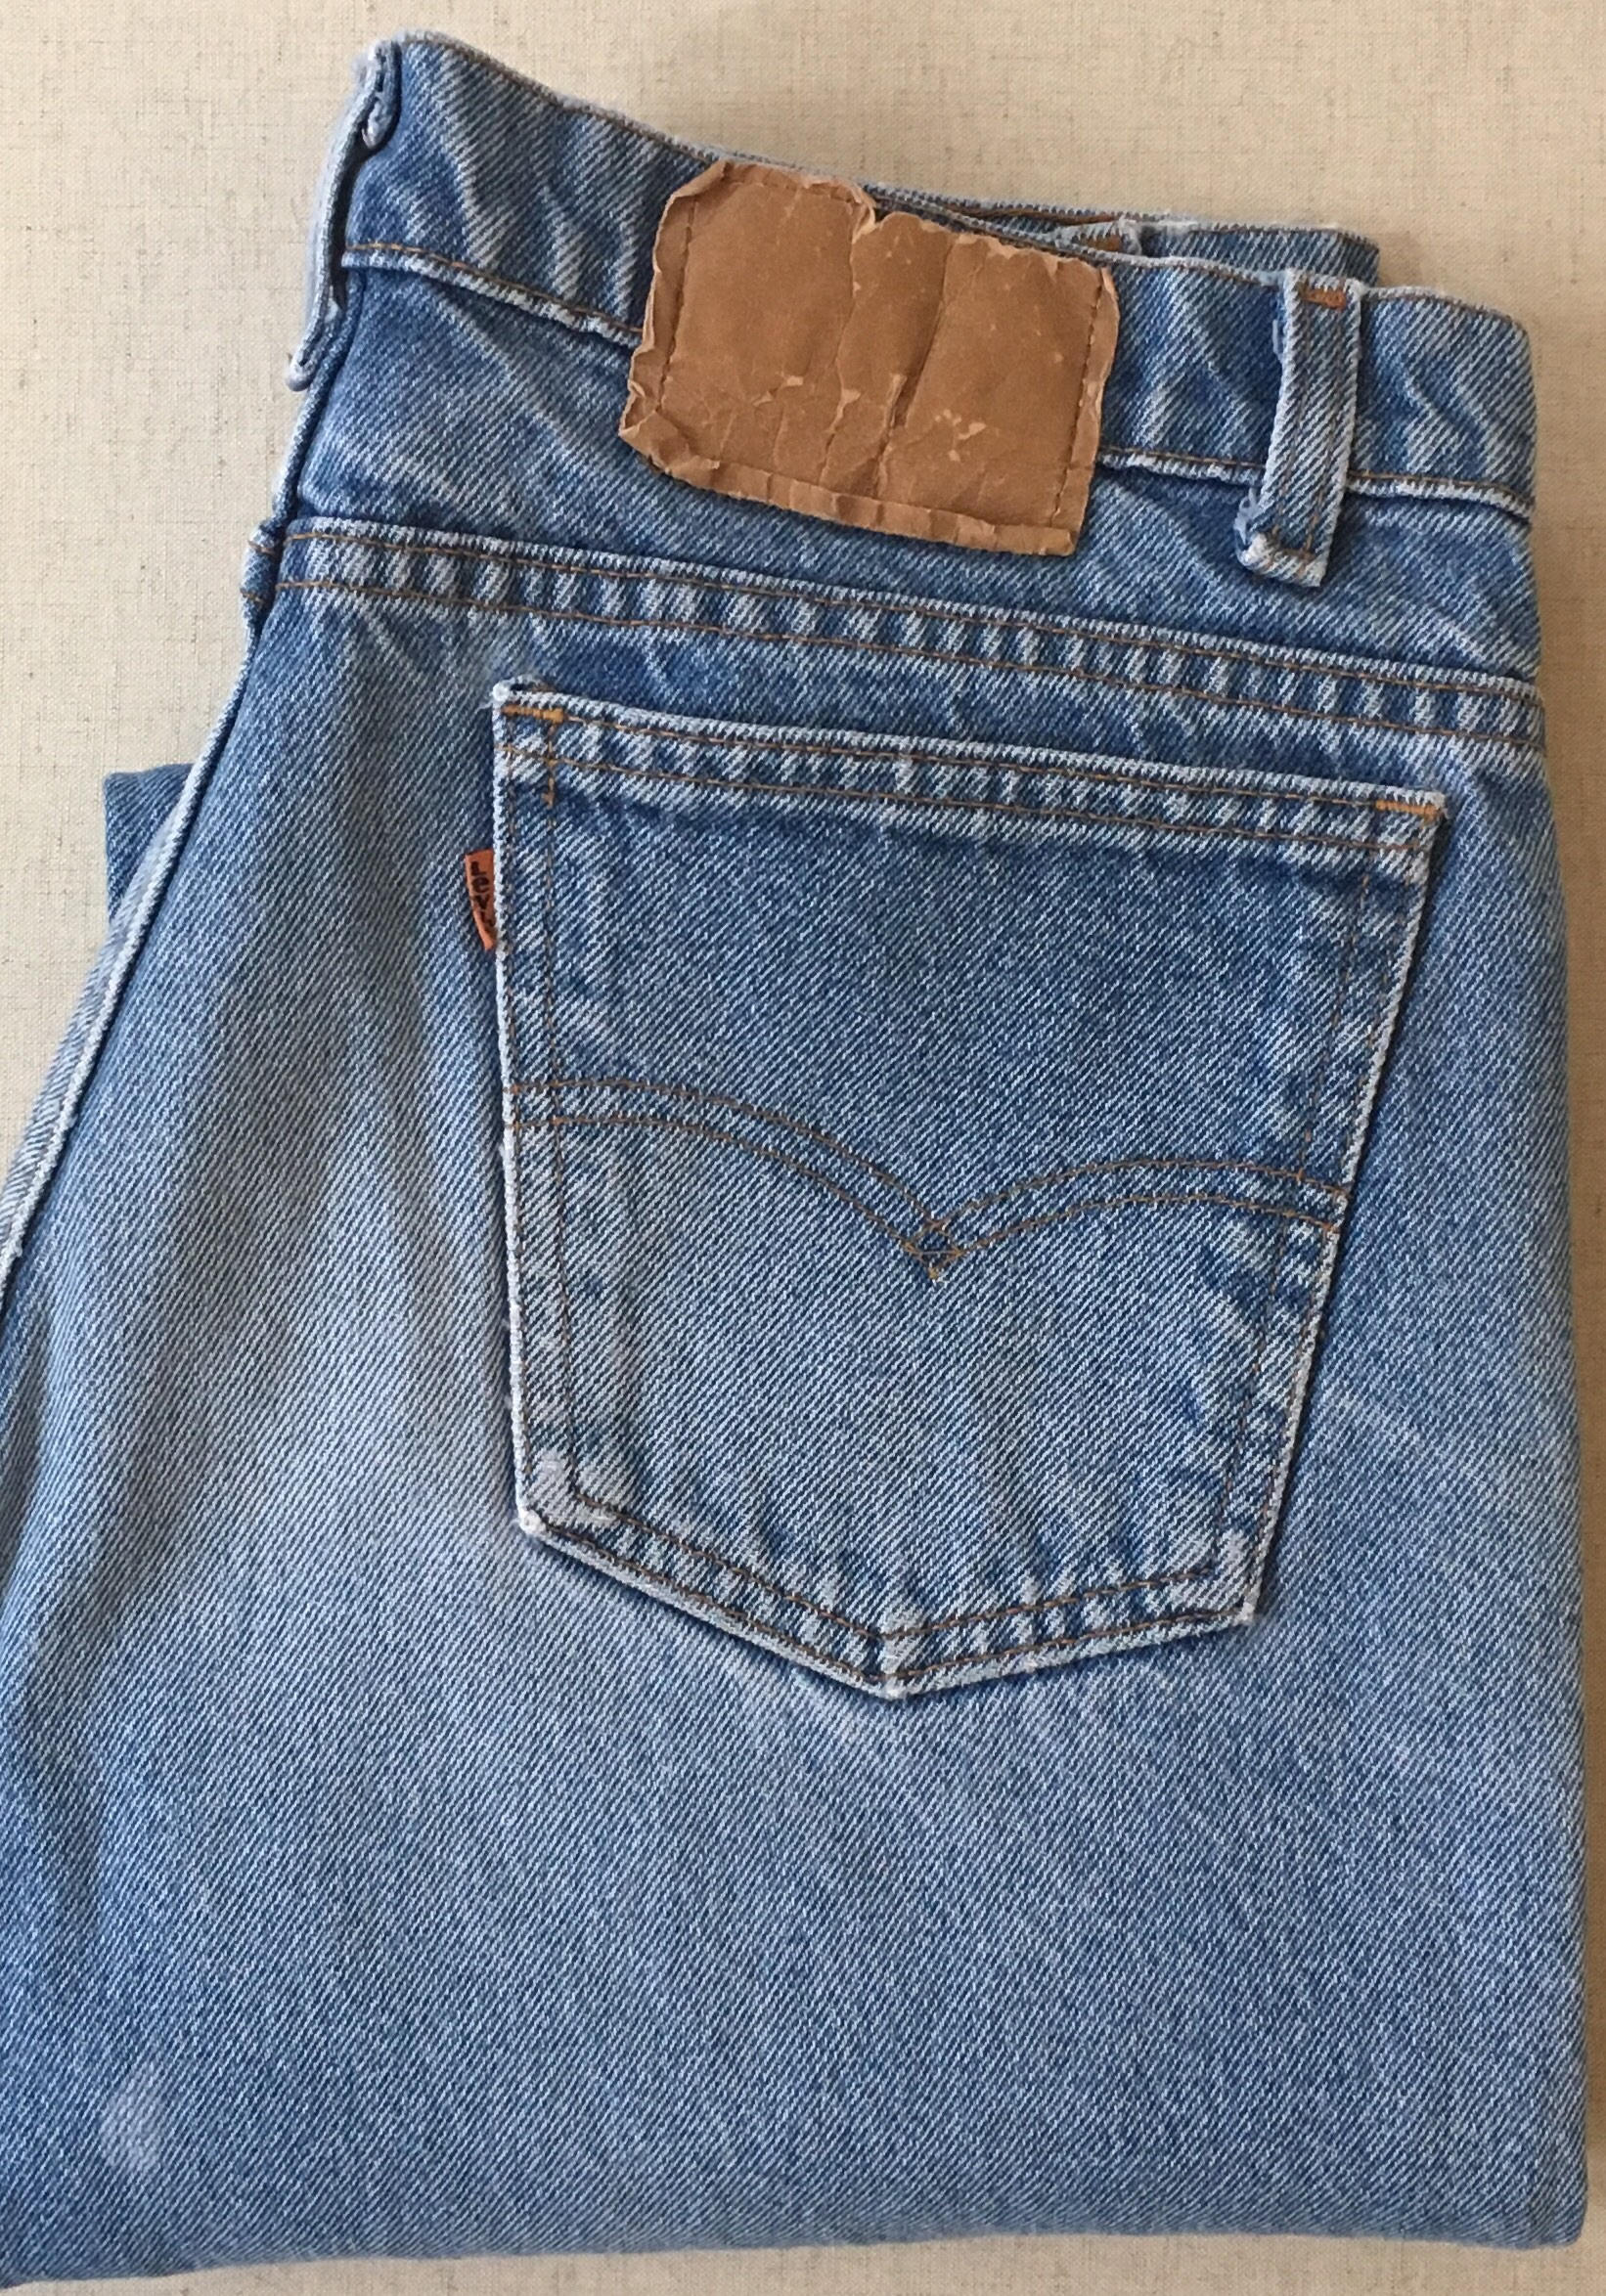 33x29 Vintage Levi's Jeans Orange Tab 501? Faded Men's Denim